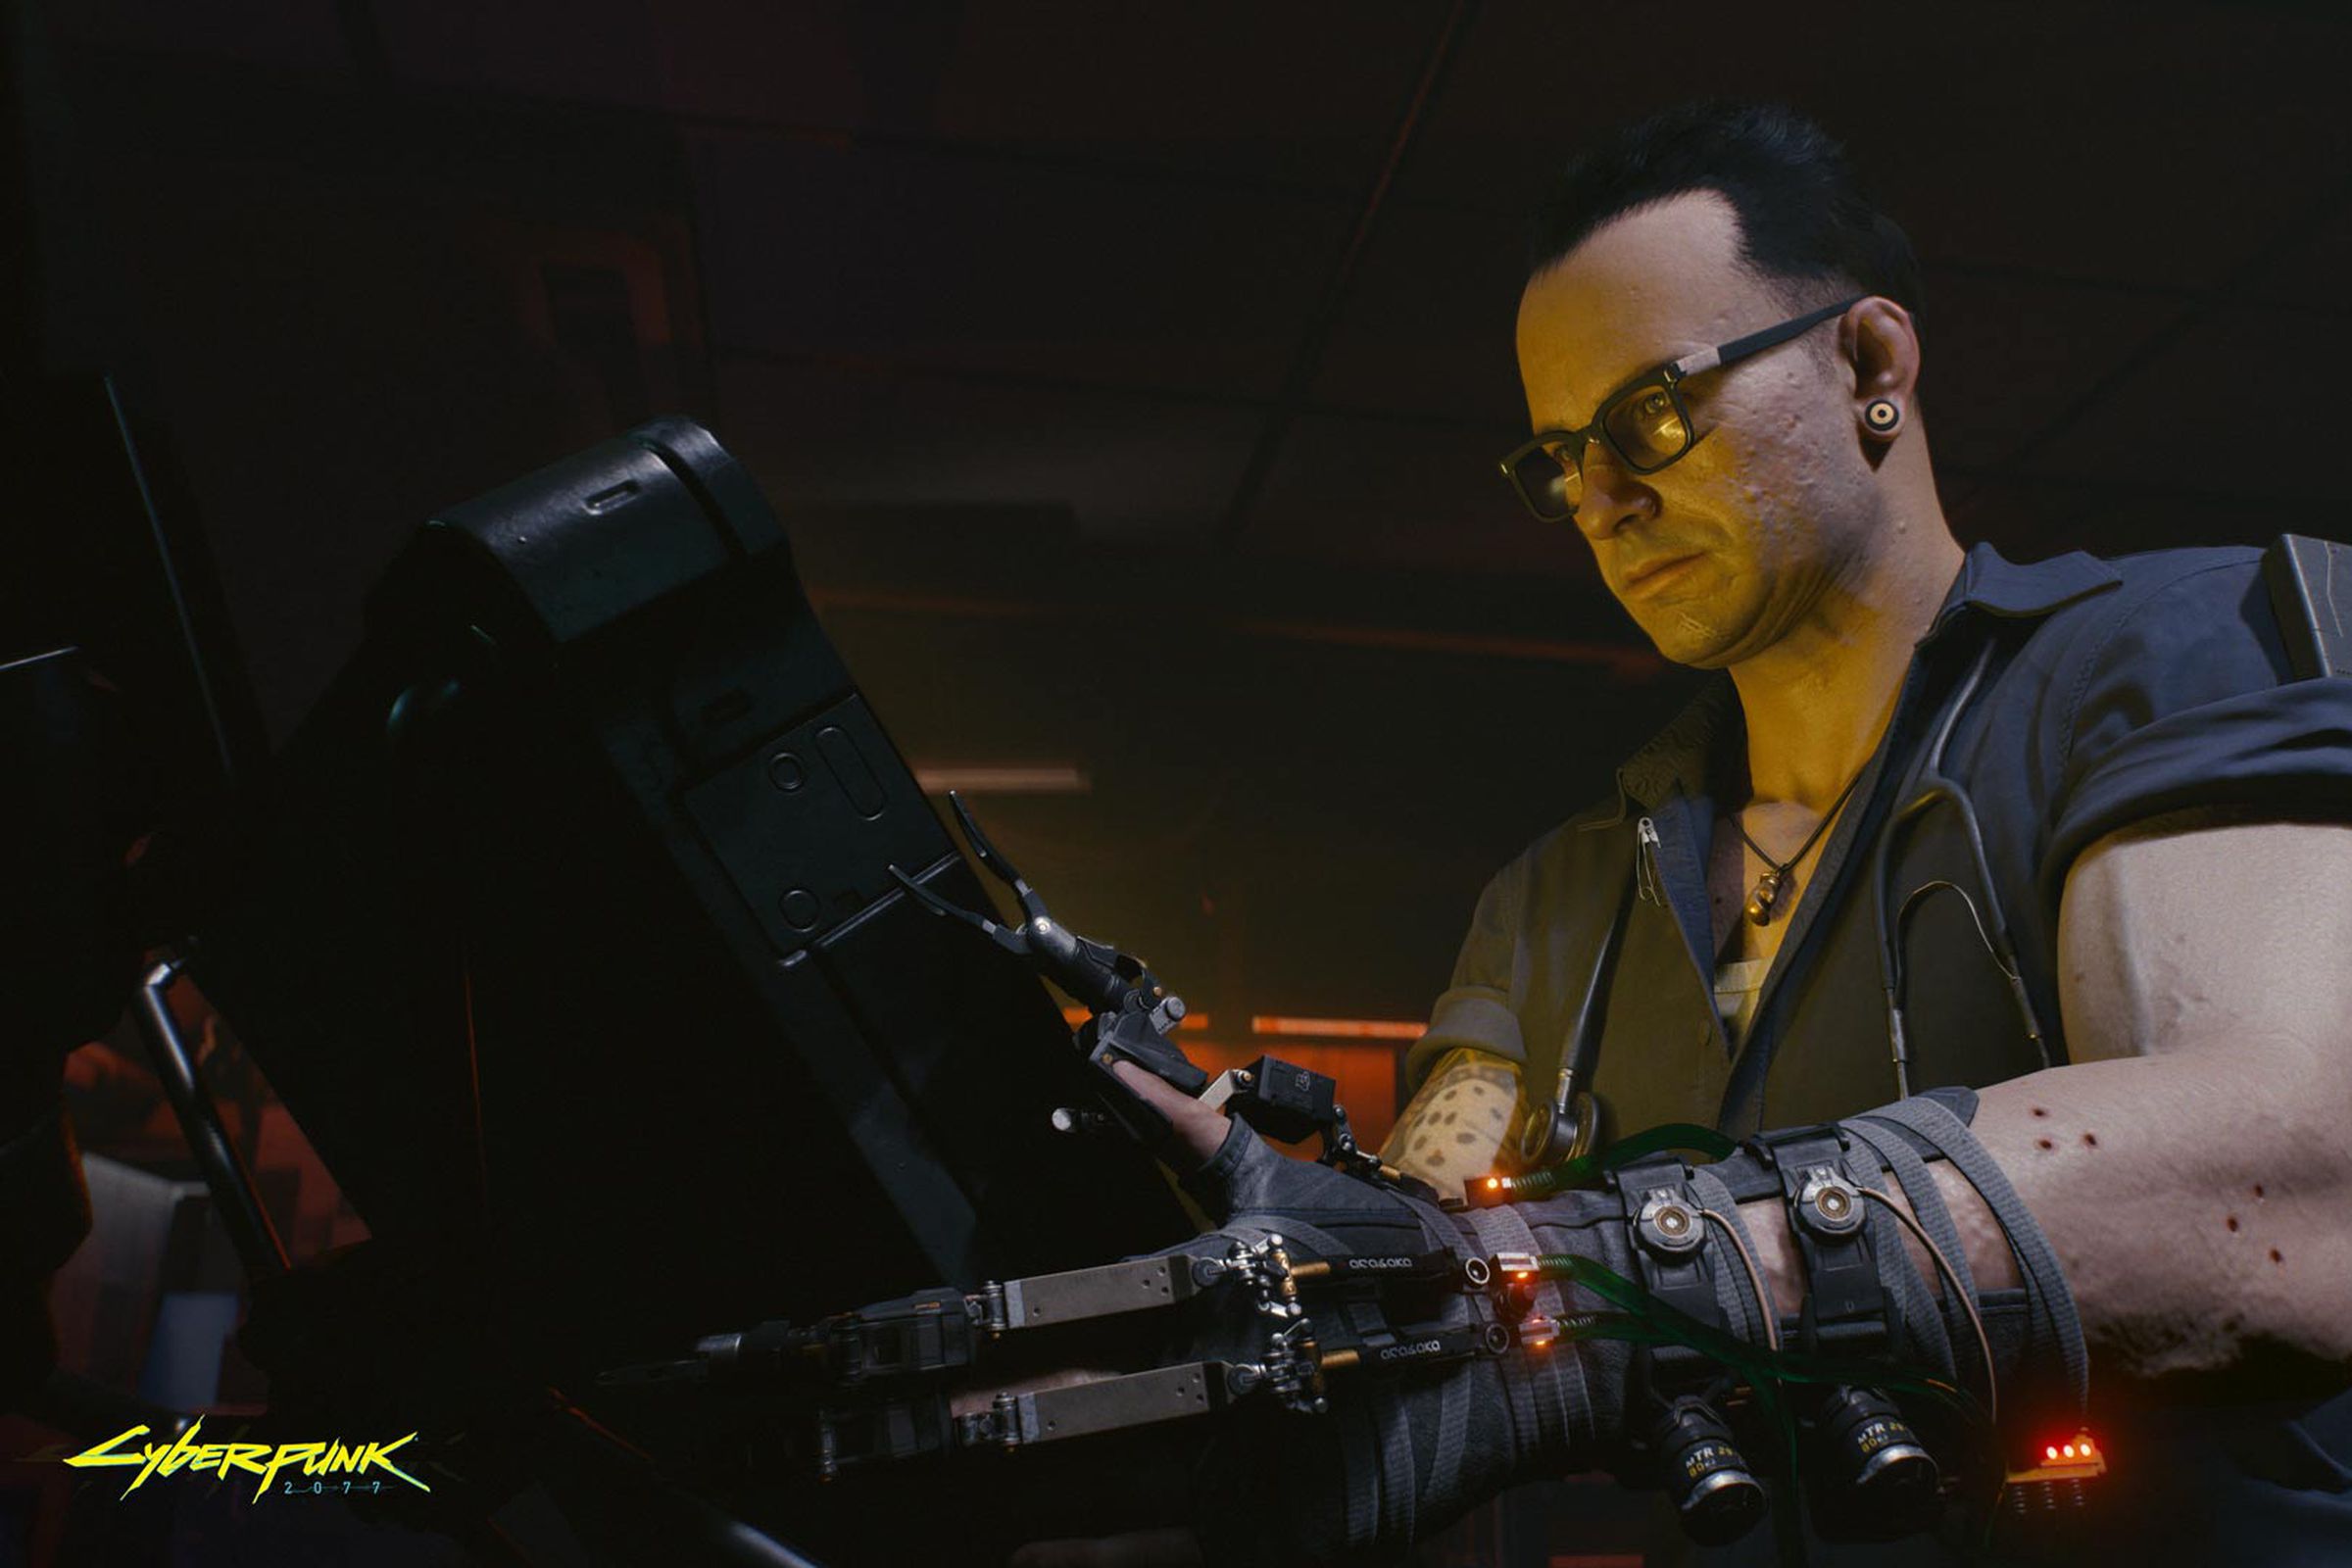 Viktor, a character in Cyberpunk 2077.